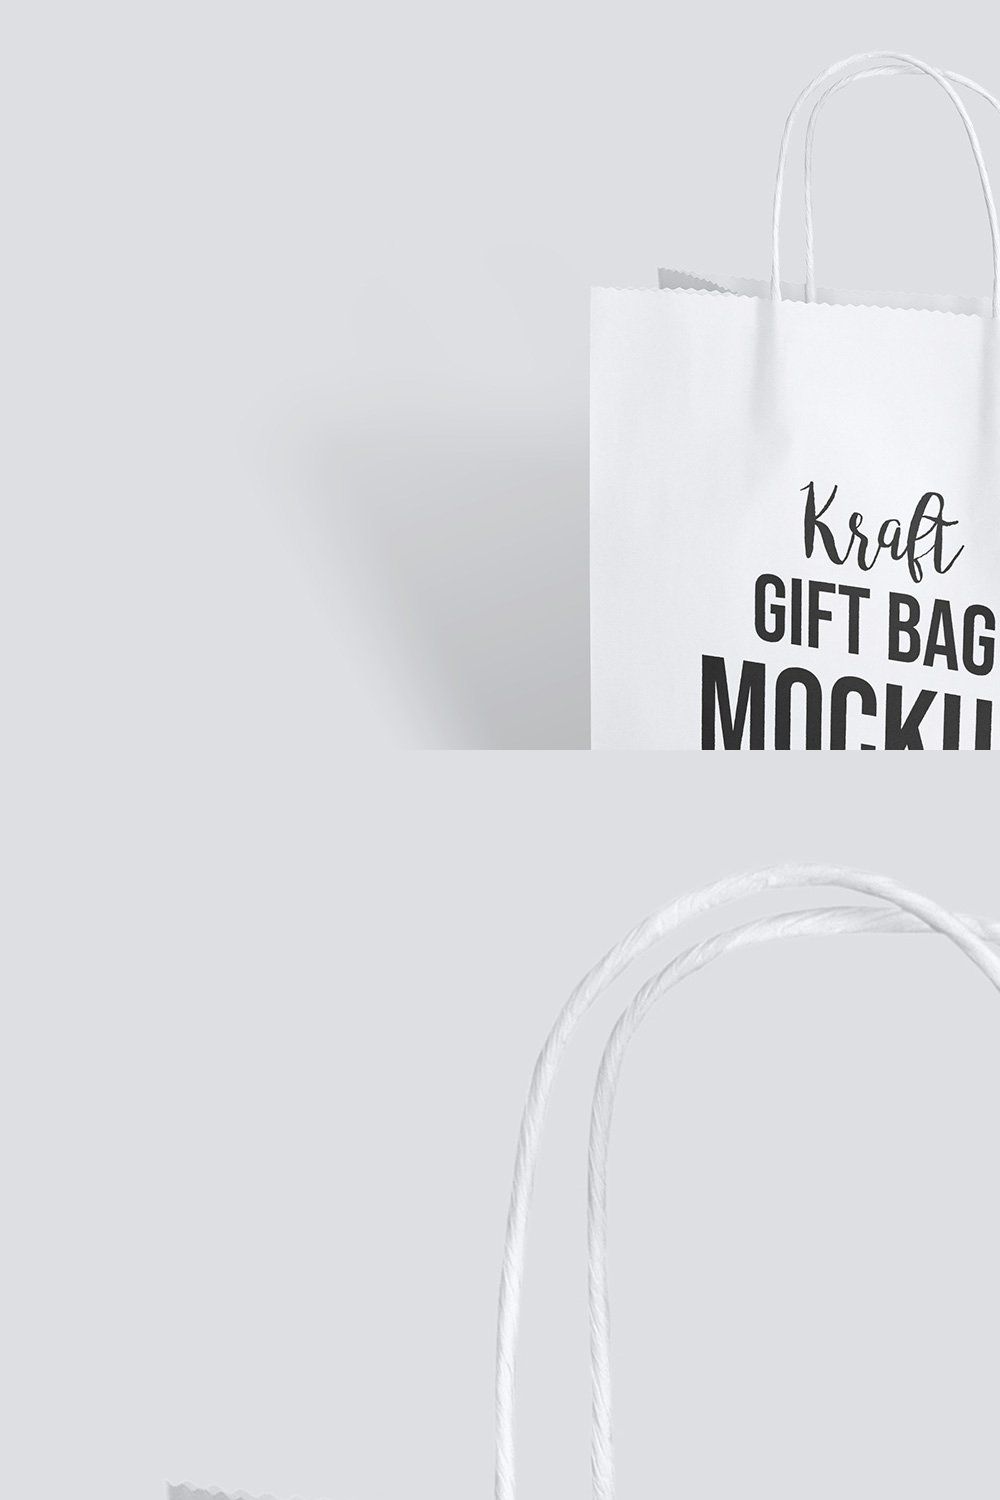 Kraft Gift Bag Mockup pinterest preview image.